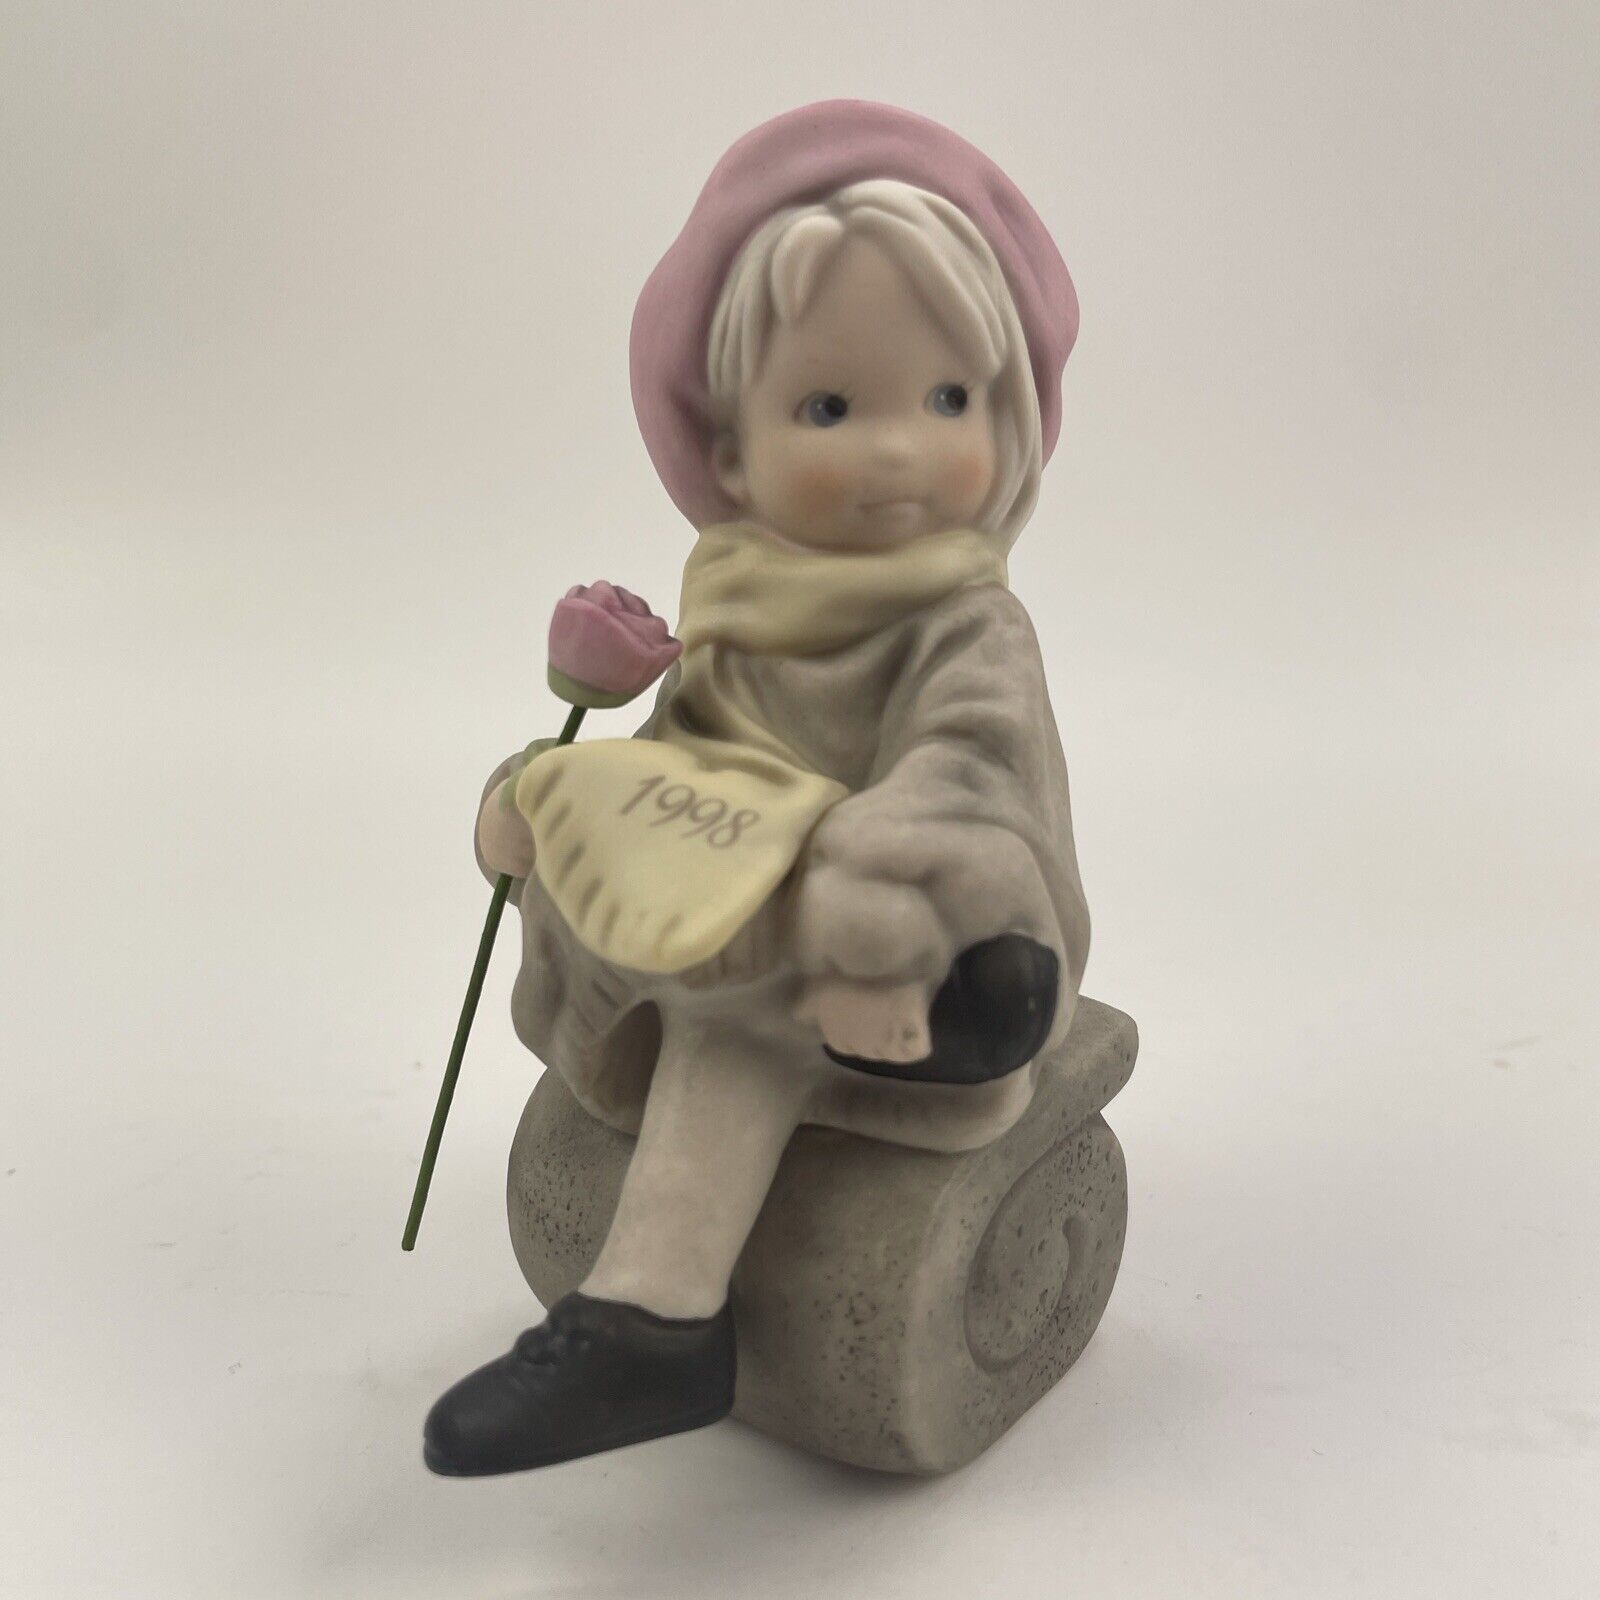 NBM Figurine Girl With Flower Alaska Momma Ceramic 1998 4 Inches Vintage 90s